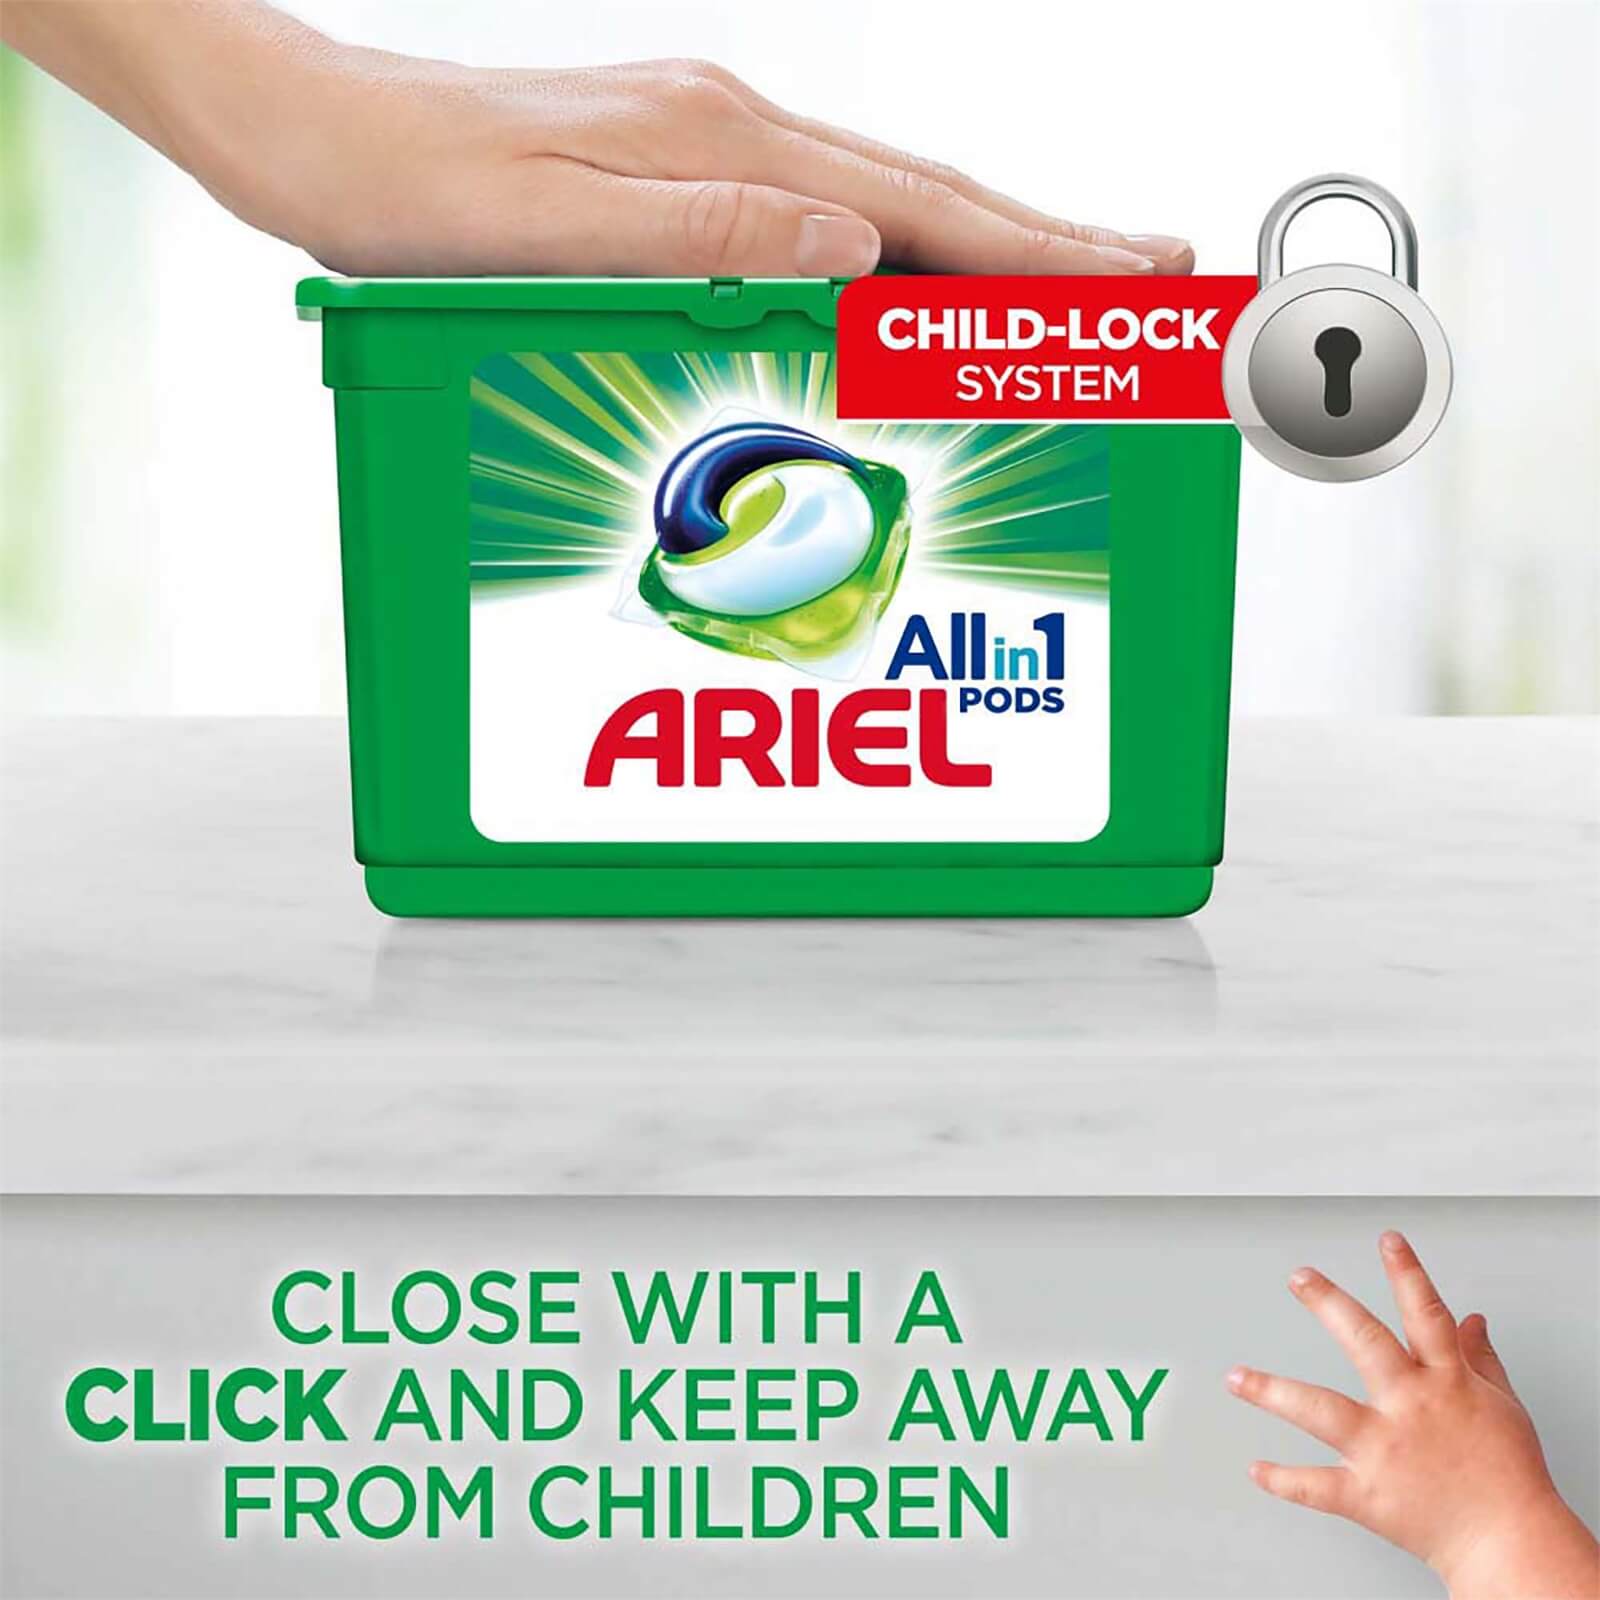 Ariel Colour All-in-1 Pods 57 Wash